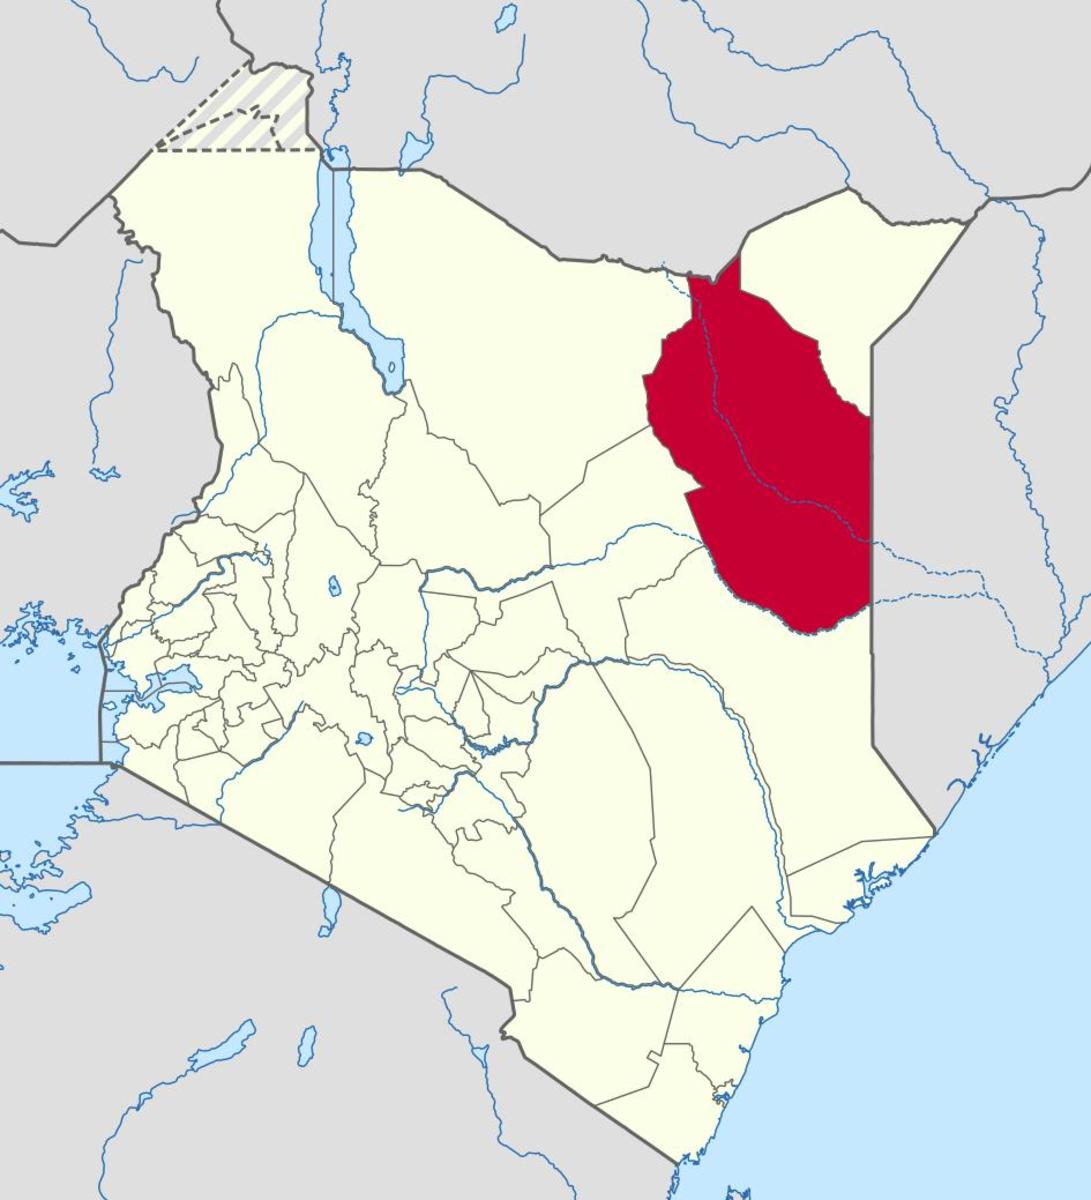 A Visit to Wajir in Northern Kenya